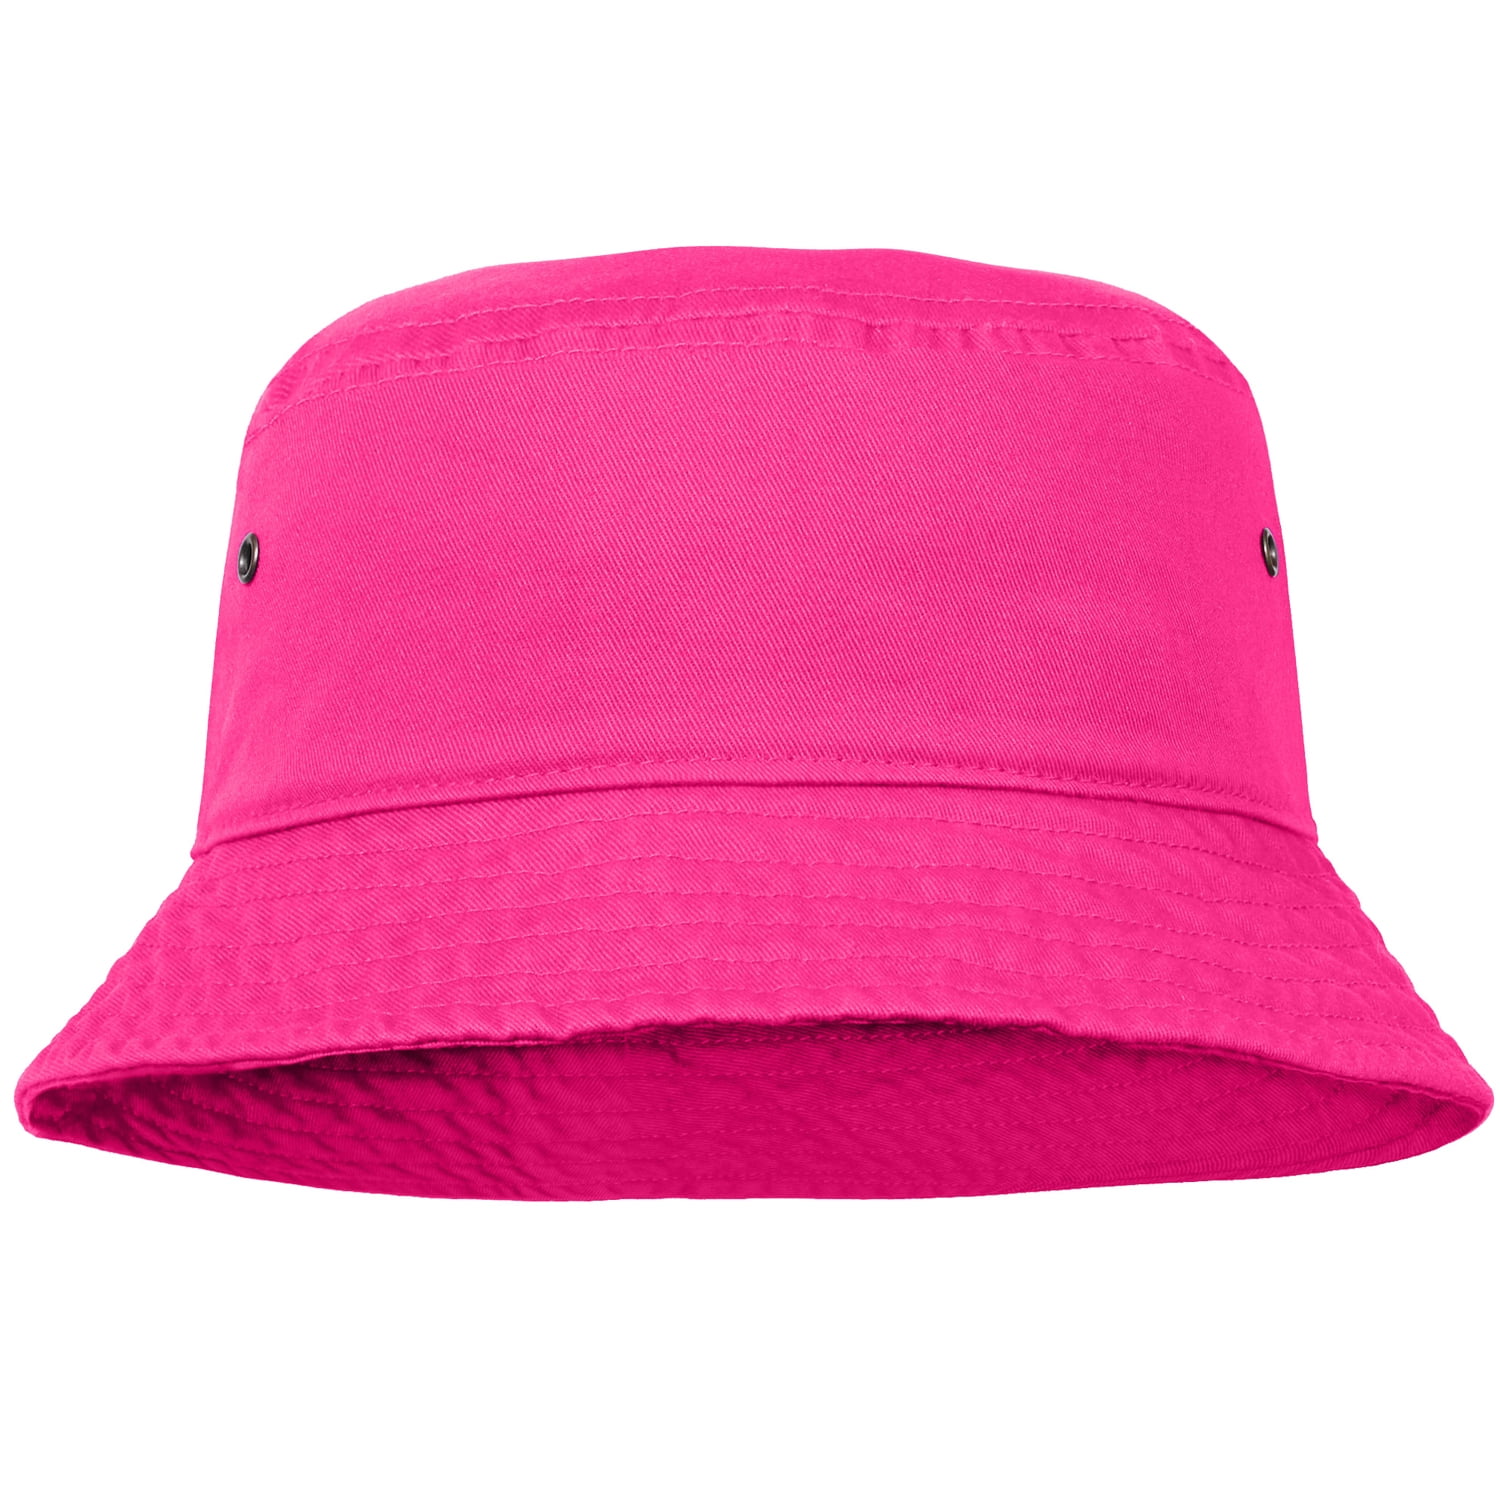 Bucket Hat for Men Women Unisex 100% Cotton Packable Foldable Summer Travel  Beach Outdoor Fishing Hat - SM Hot Pink